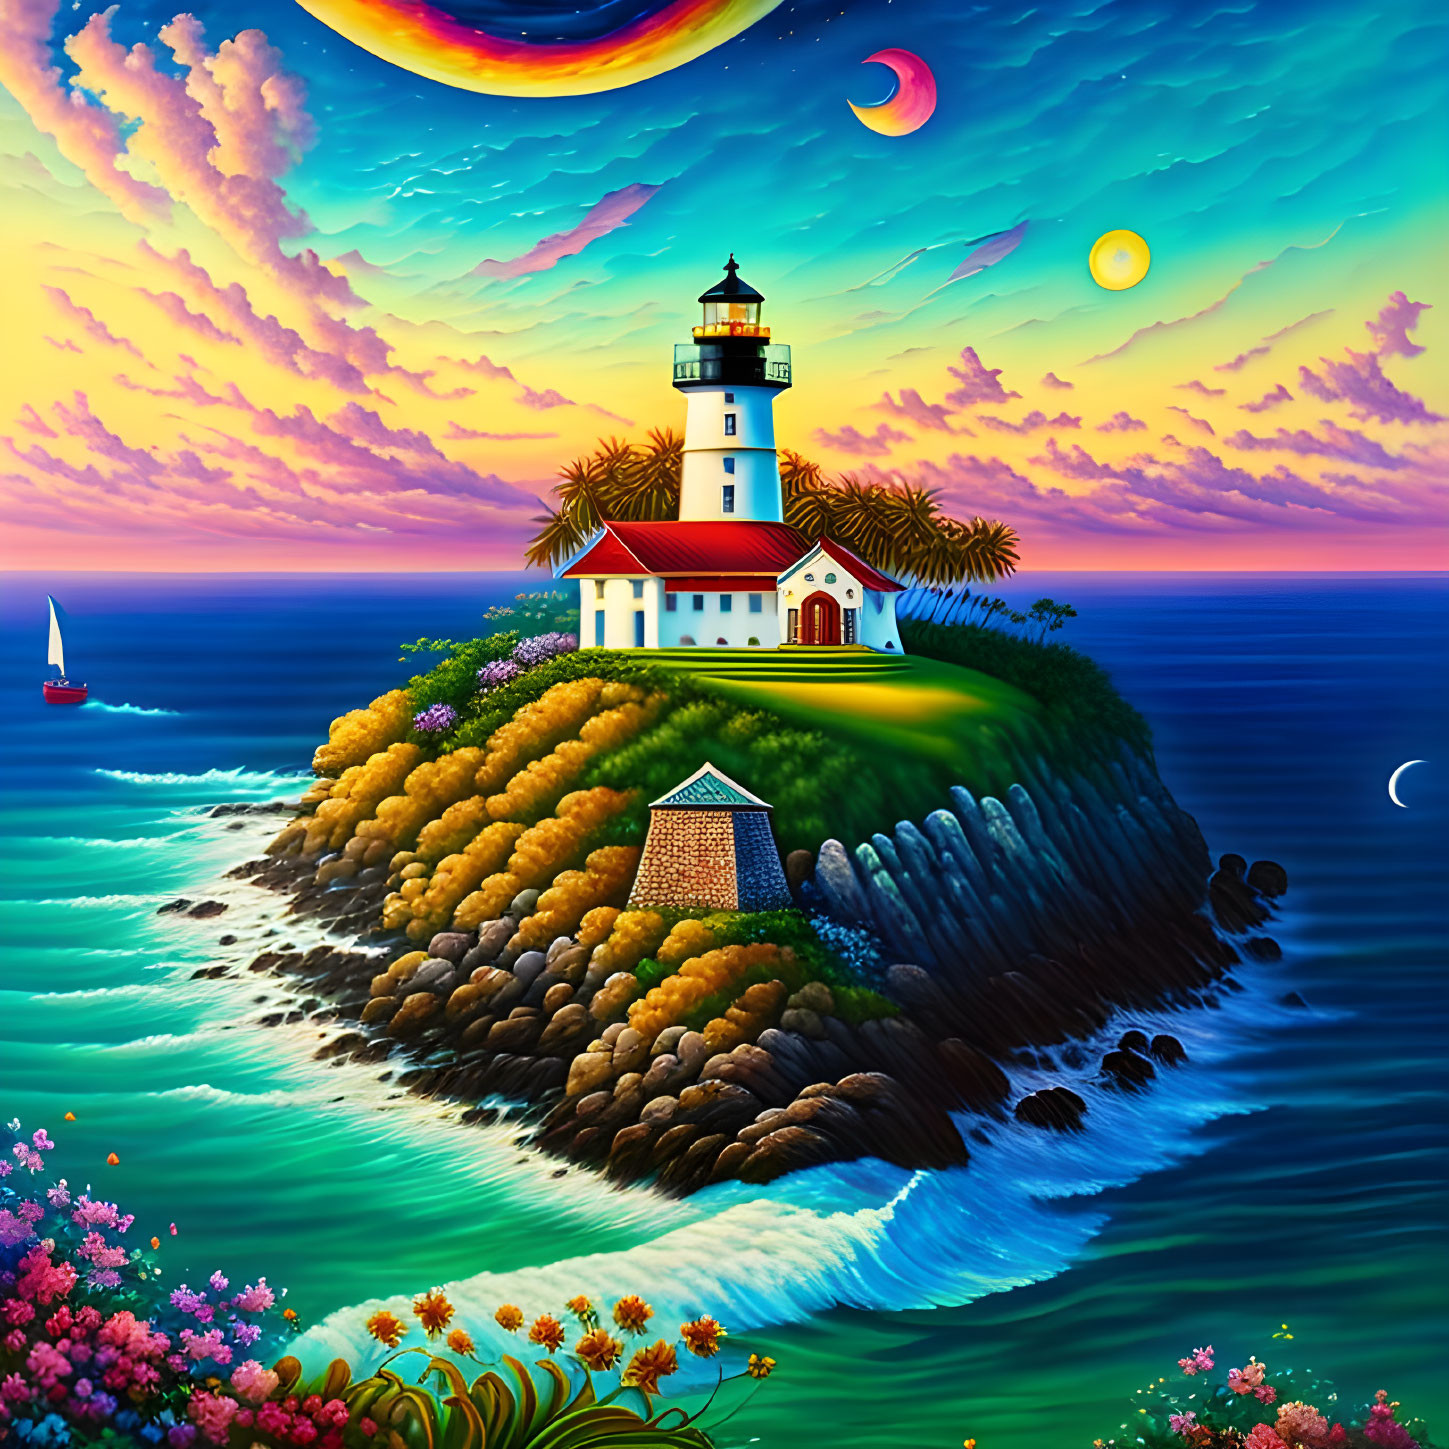 Colorful Fantasy Landscape with Lighthouse, Celestial Sky, Ocean, and Vegetation